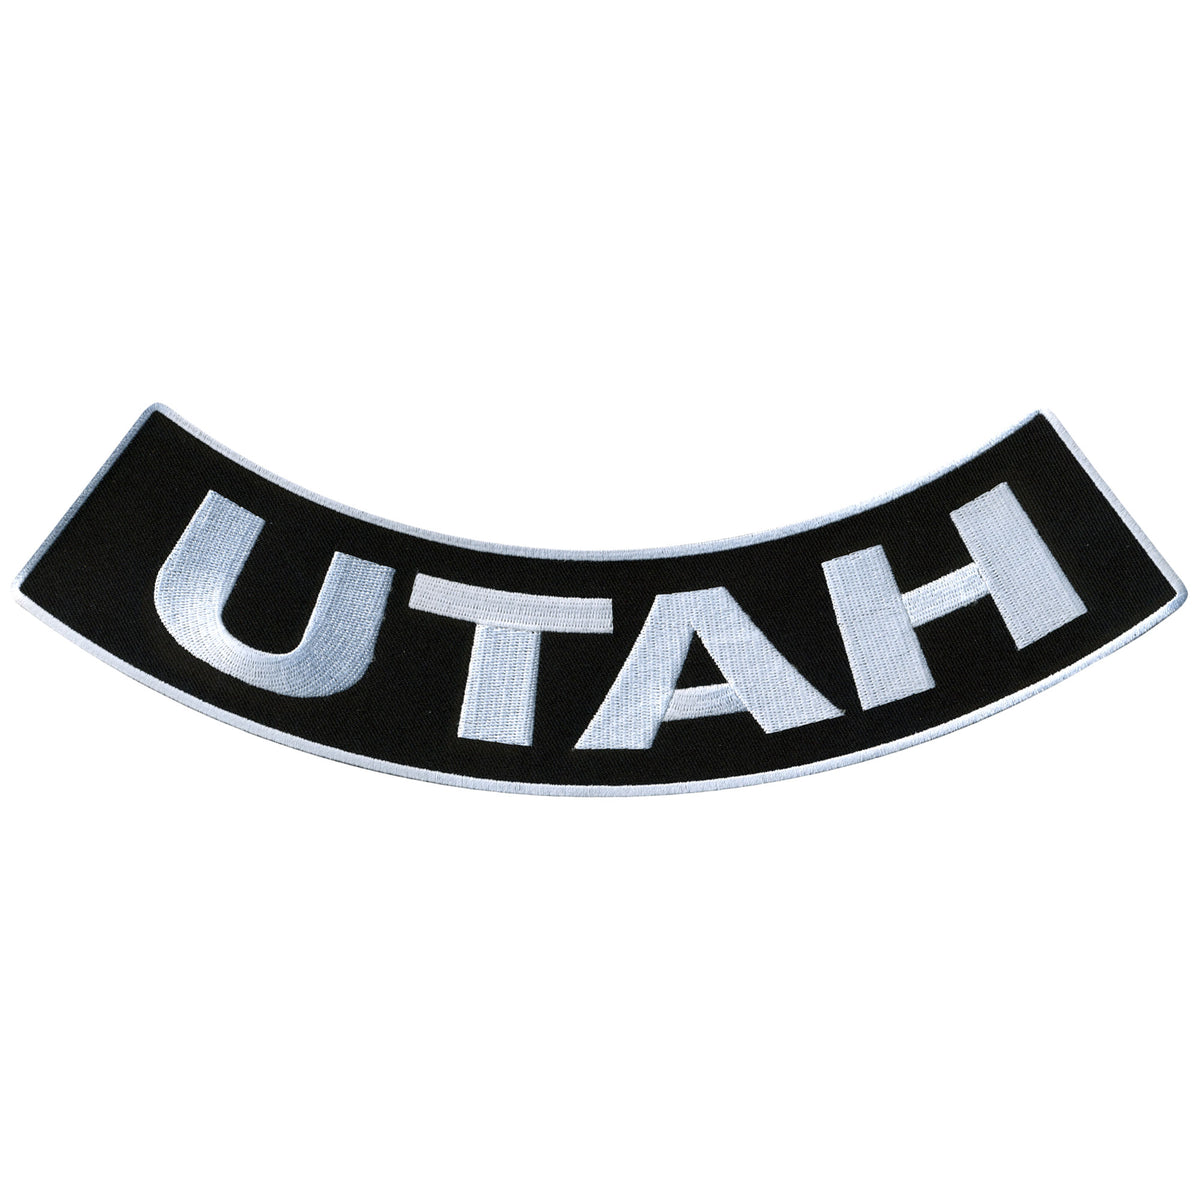 Hot Leathers Utah 12” X 3” Bottom Rocker Patch